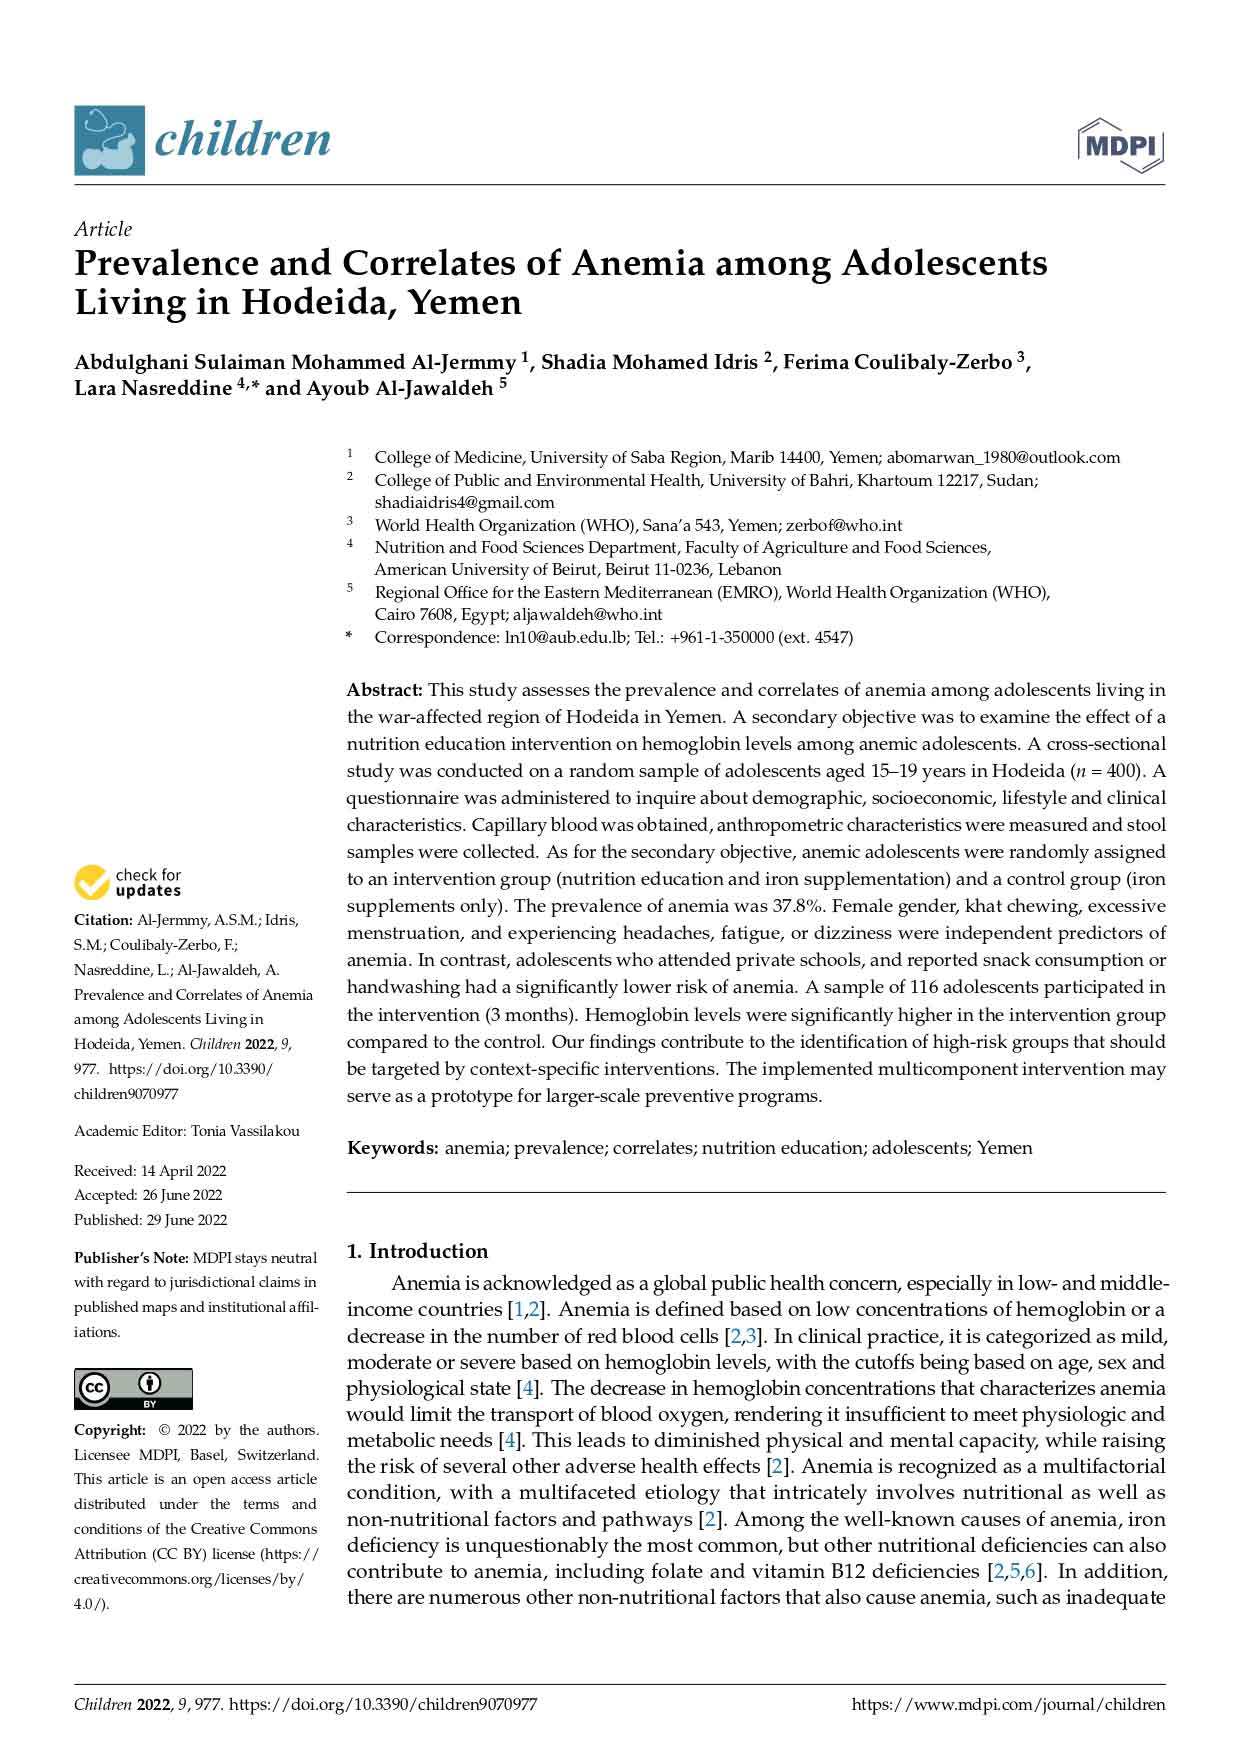 Prevalence and correlates of anemia among adolescents living in Hodeida, Yemen